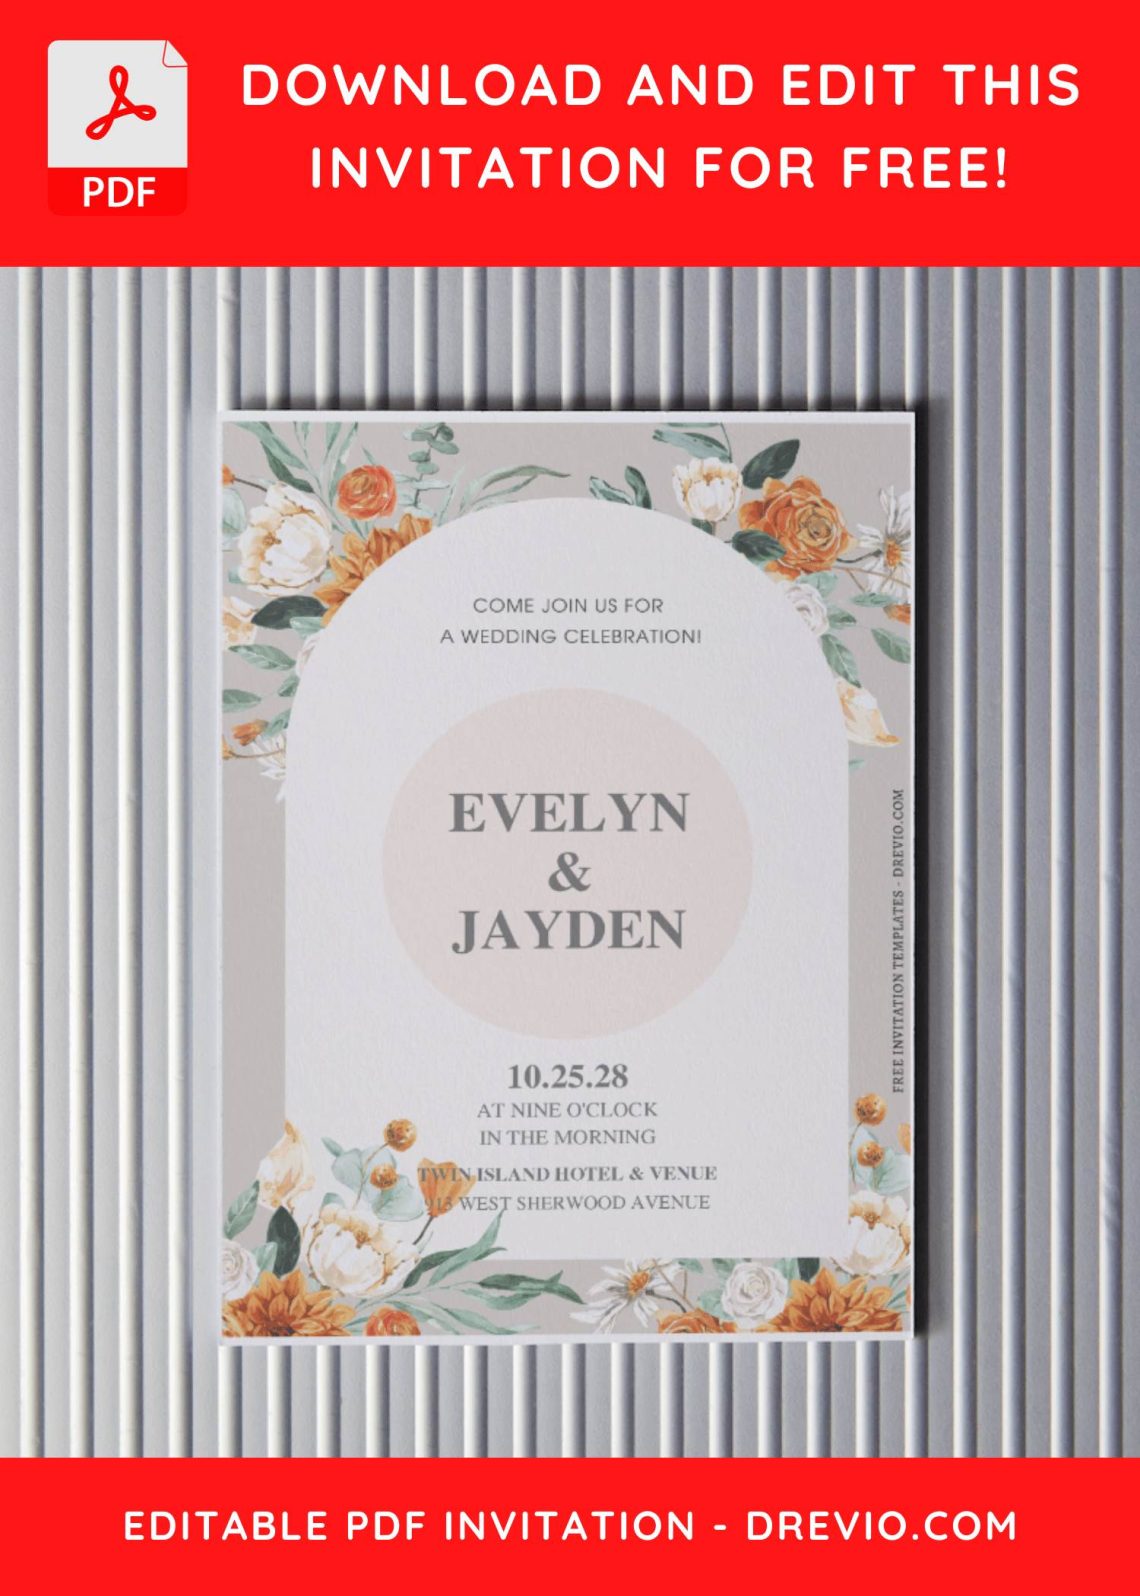 (Free Editable PDF) Exquisite Floral & Greenery Wedding Invitation Templates I